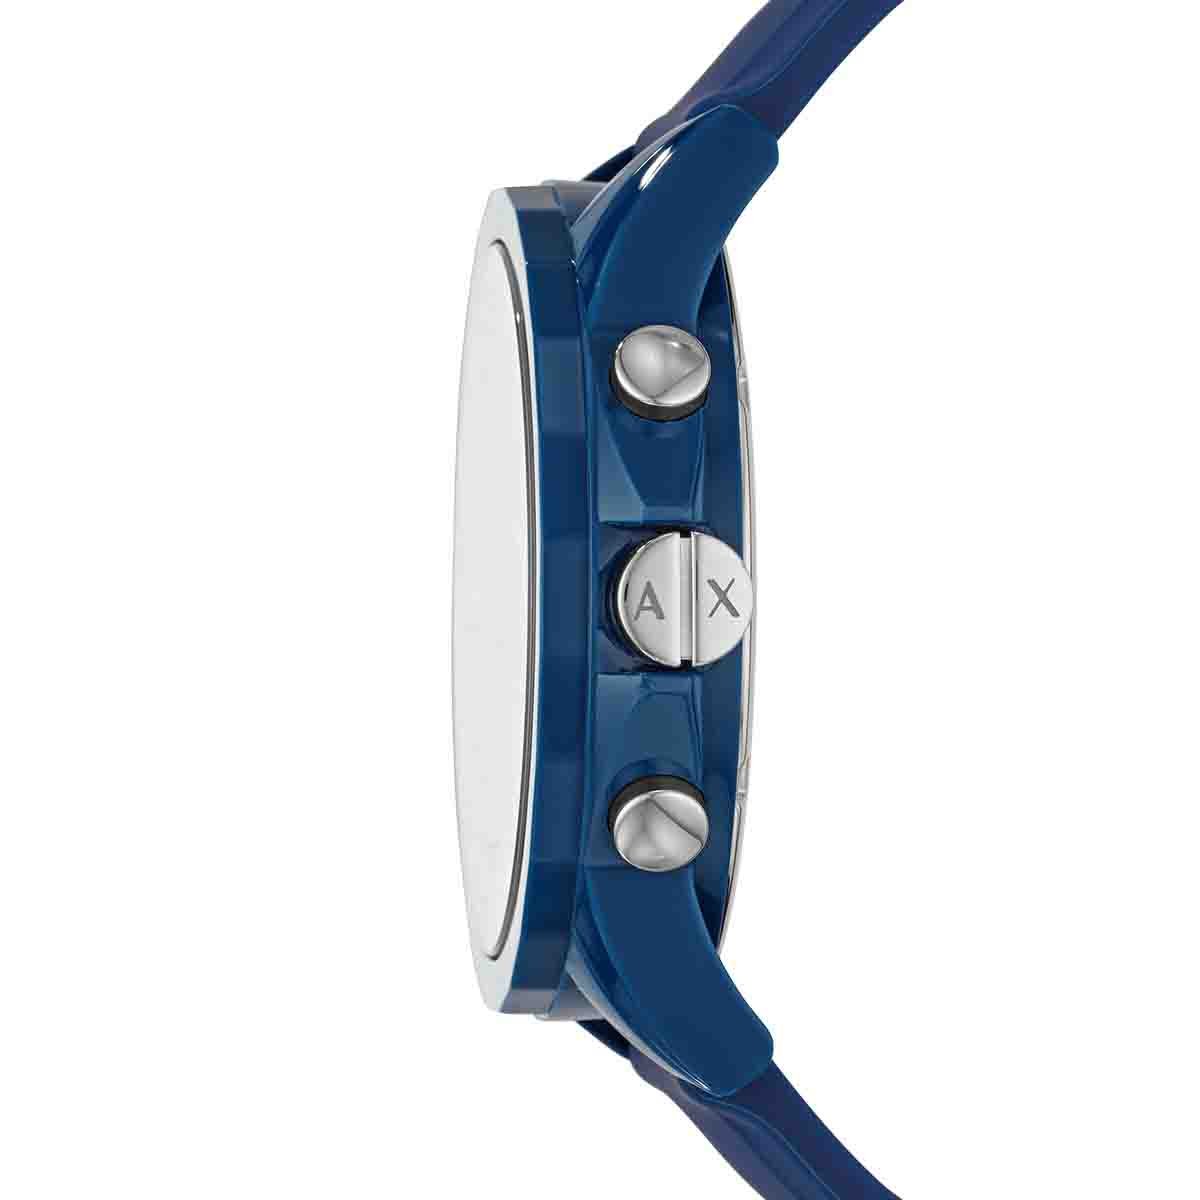 Reloj para Caballero Color Azul Armani Exchange